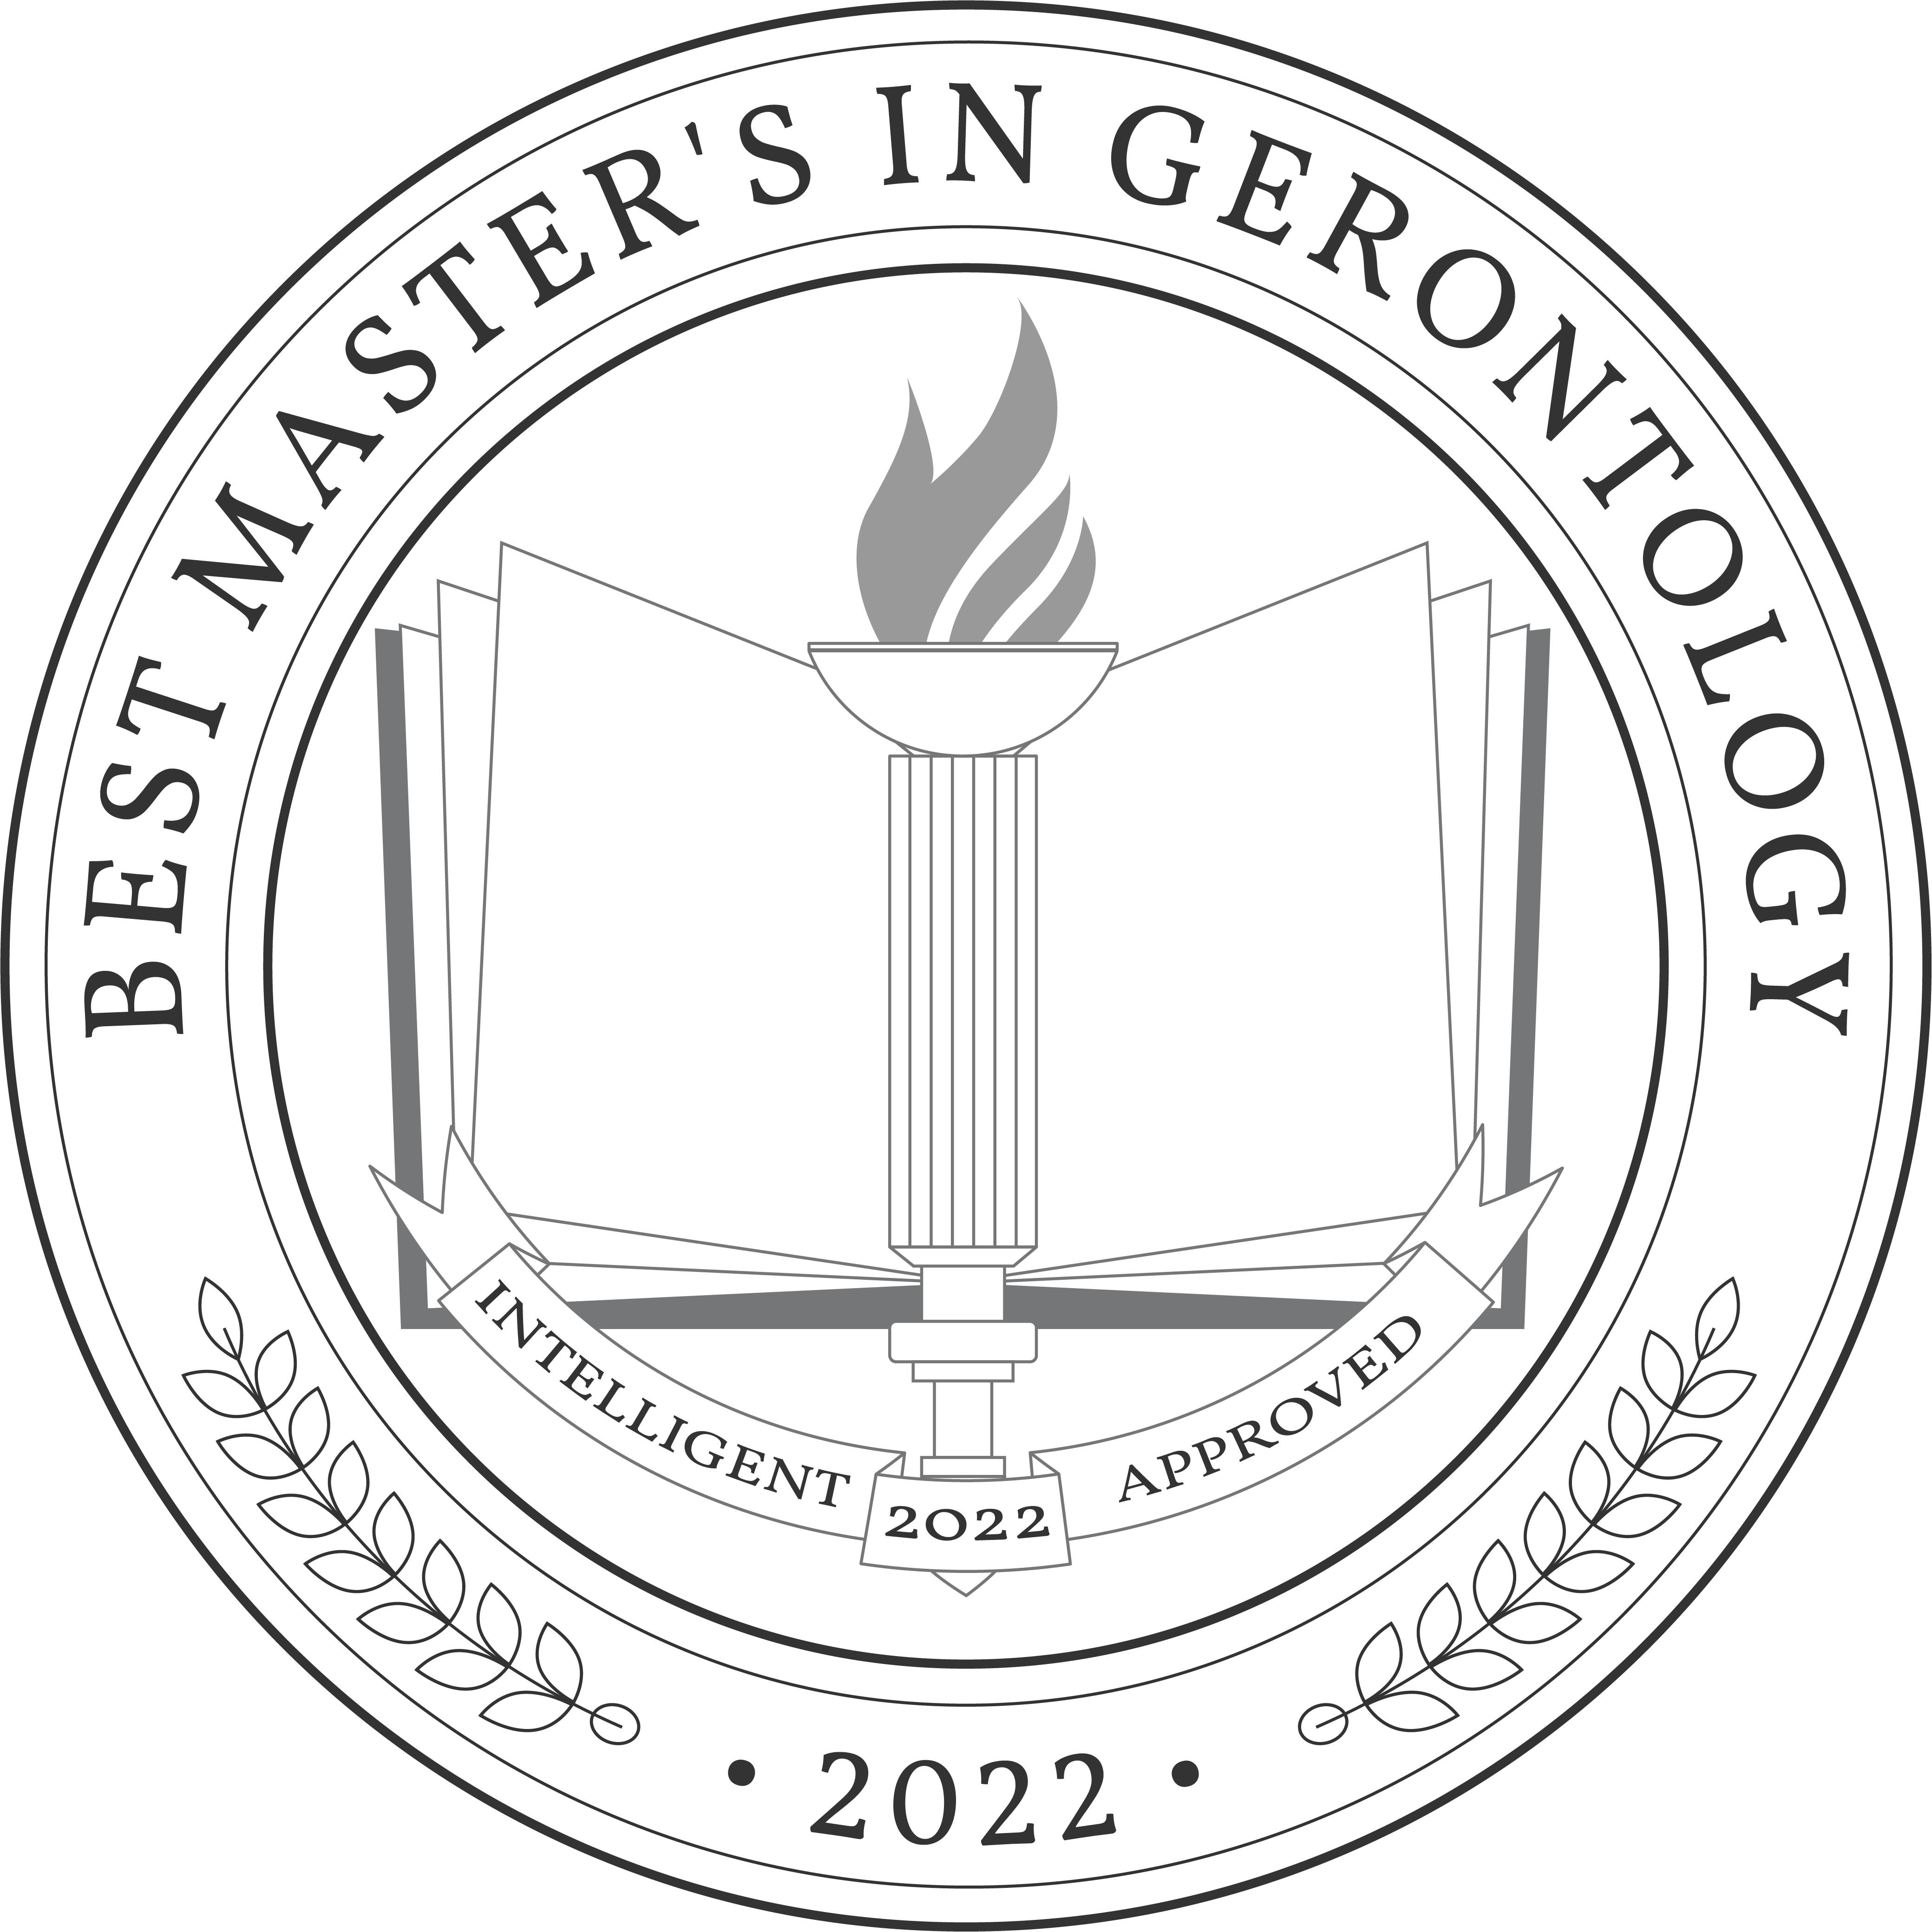 Best Master's in Gerontology Degree Programs